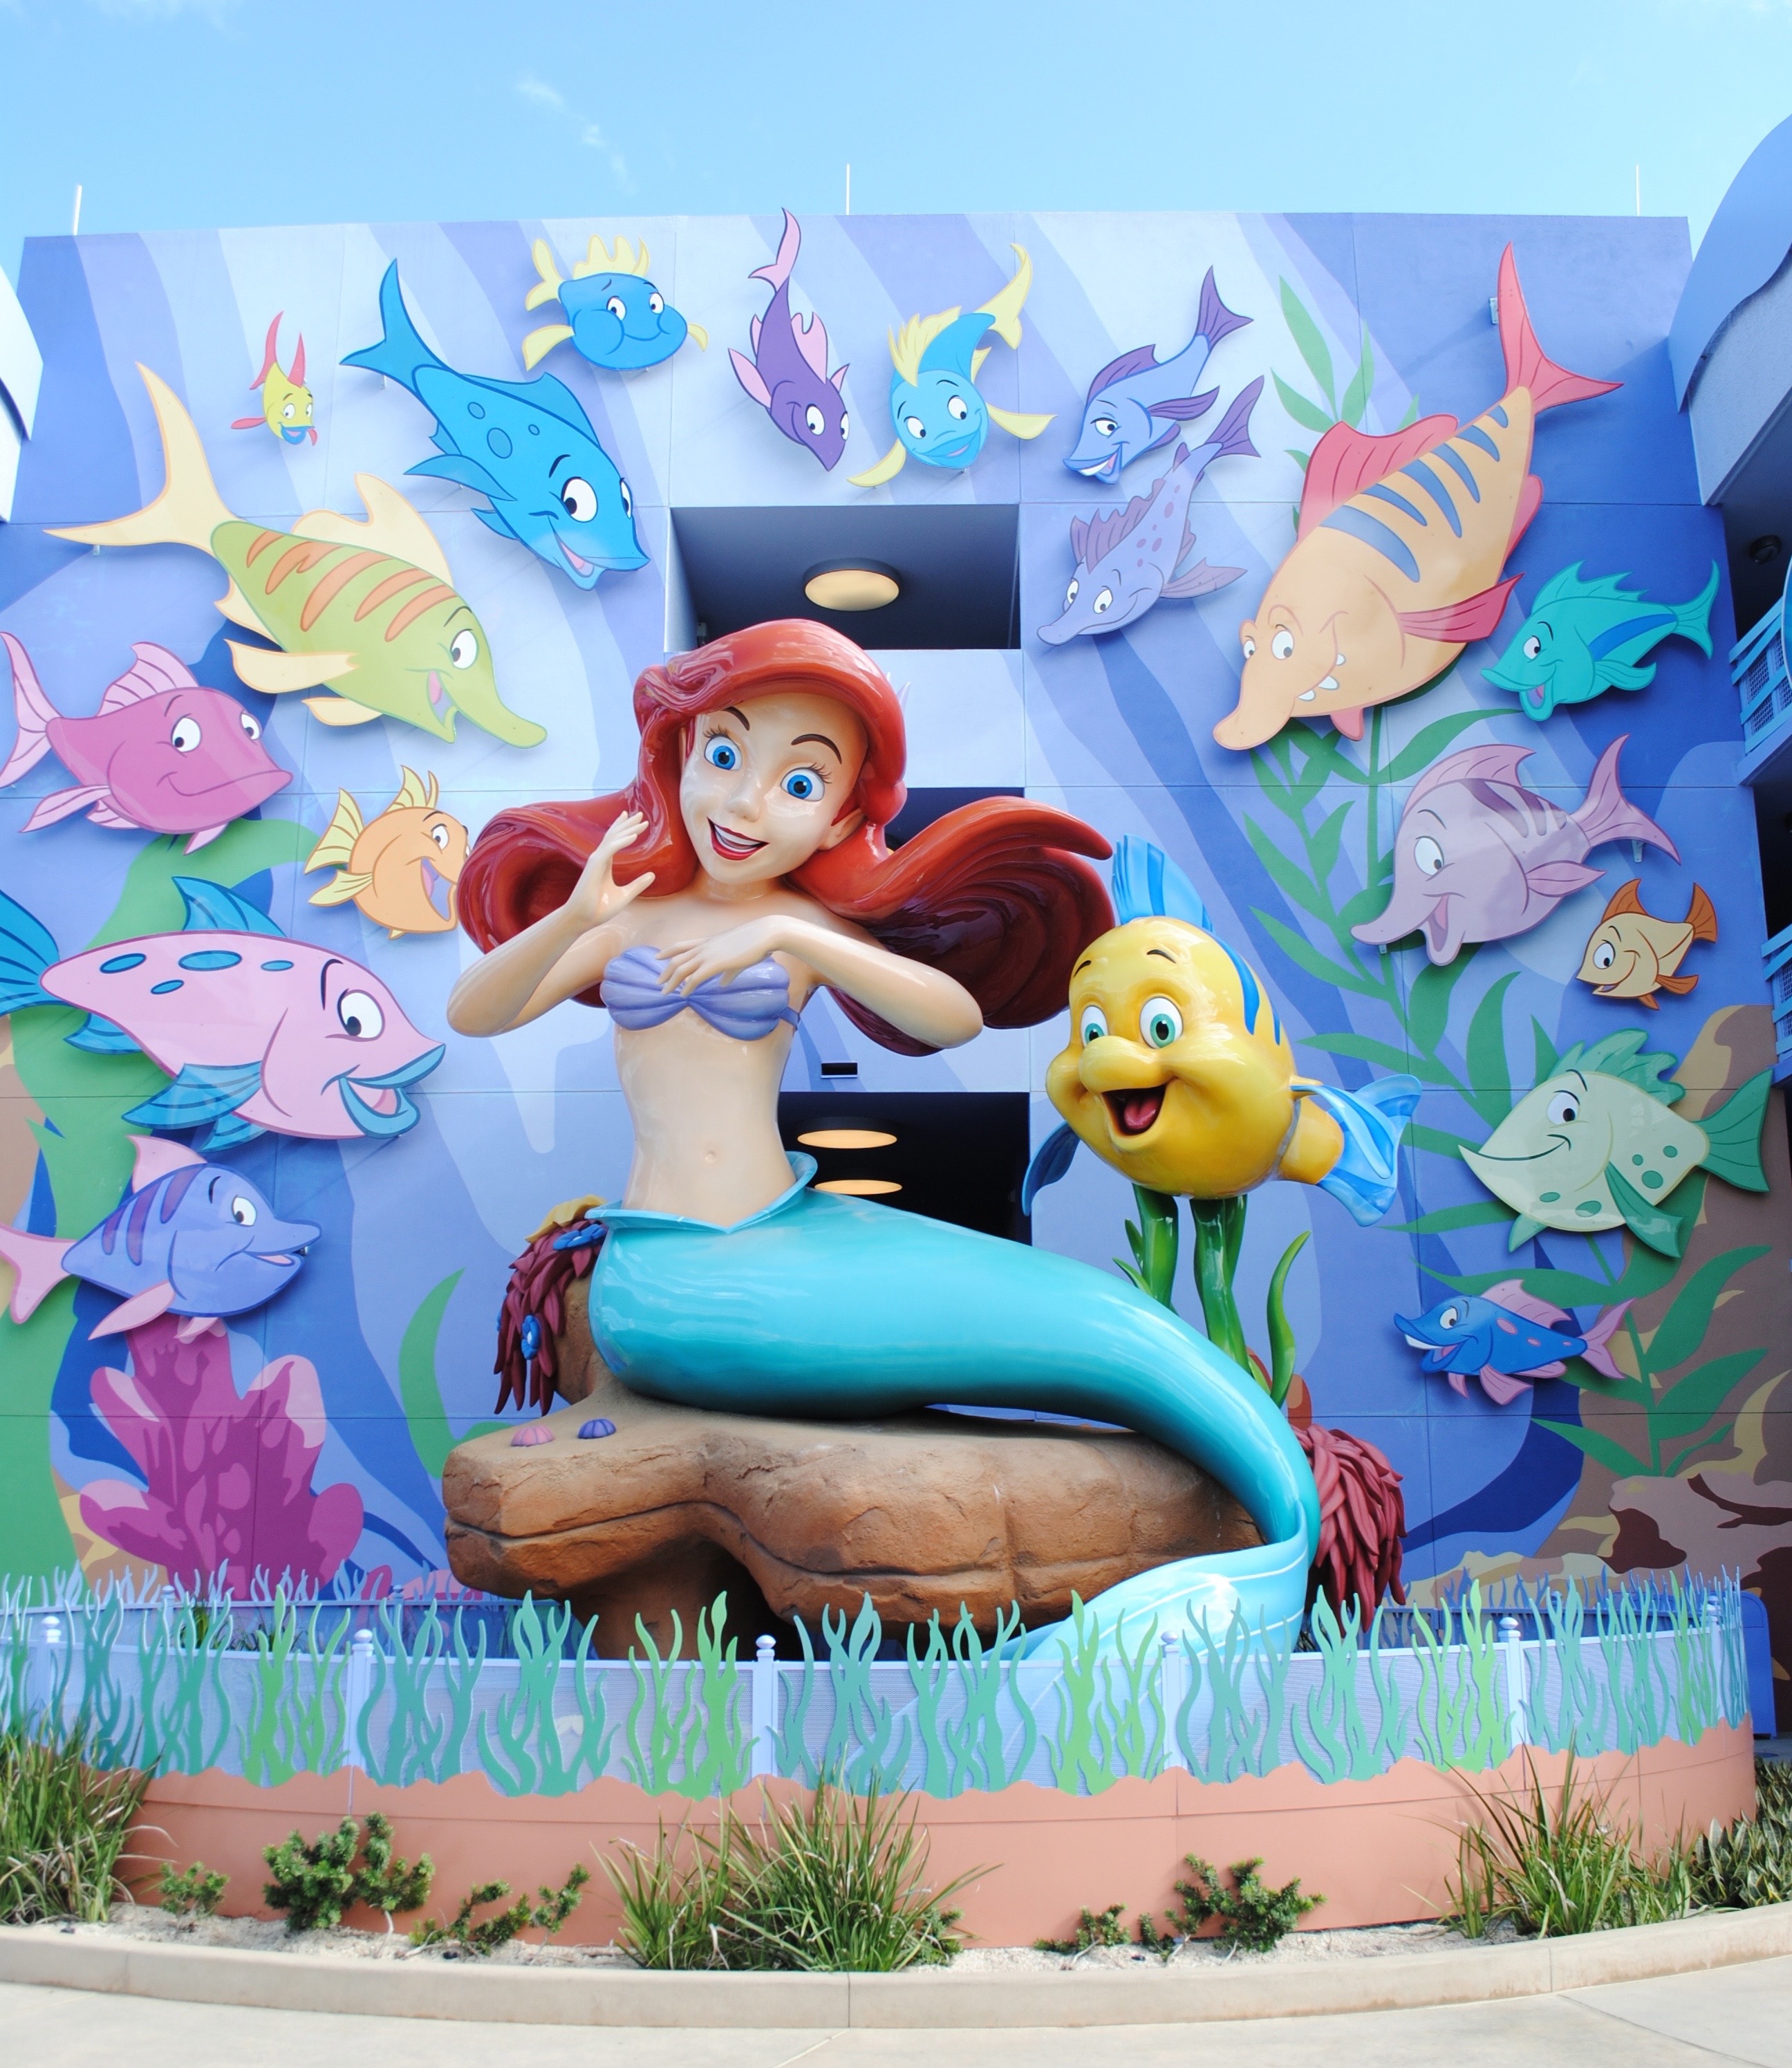 Walt Disney World Resort Art of Animation Review: The Little Mermaid Room